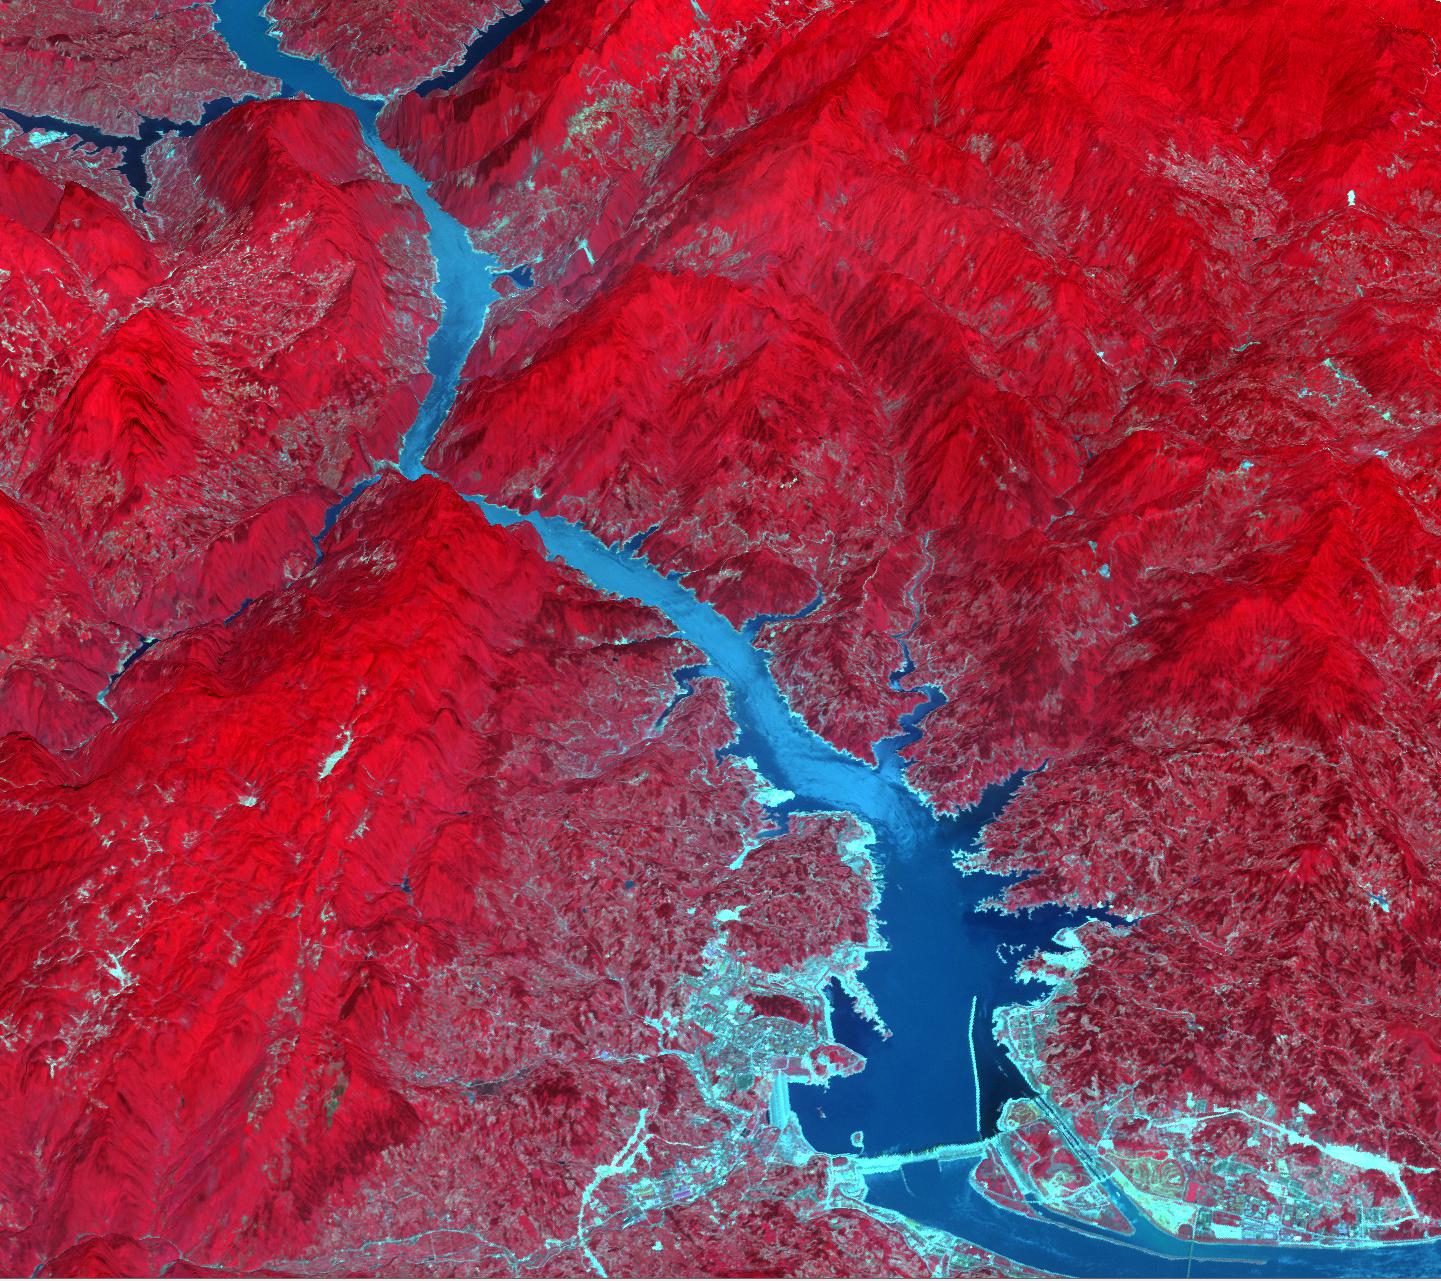 Space Image Three Gorges Dam China